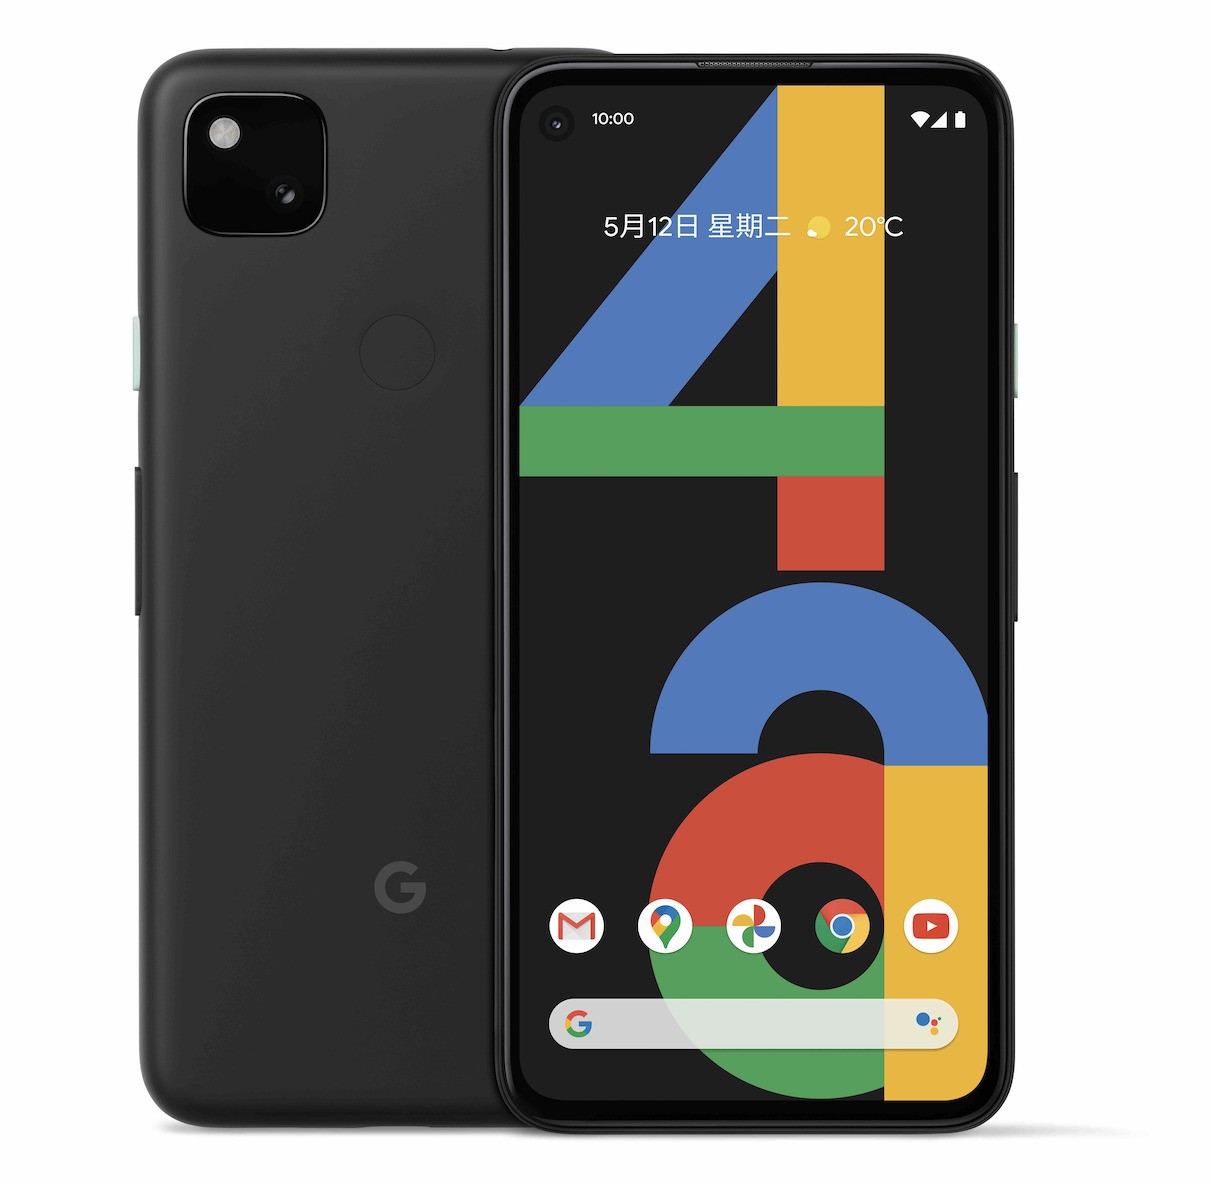 Google 宣布最新硬件产品 Pixel 4a 智慧型手机将在台湾上市 现已开放网络预购